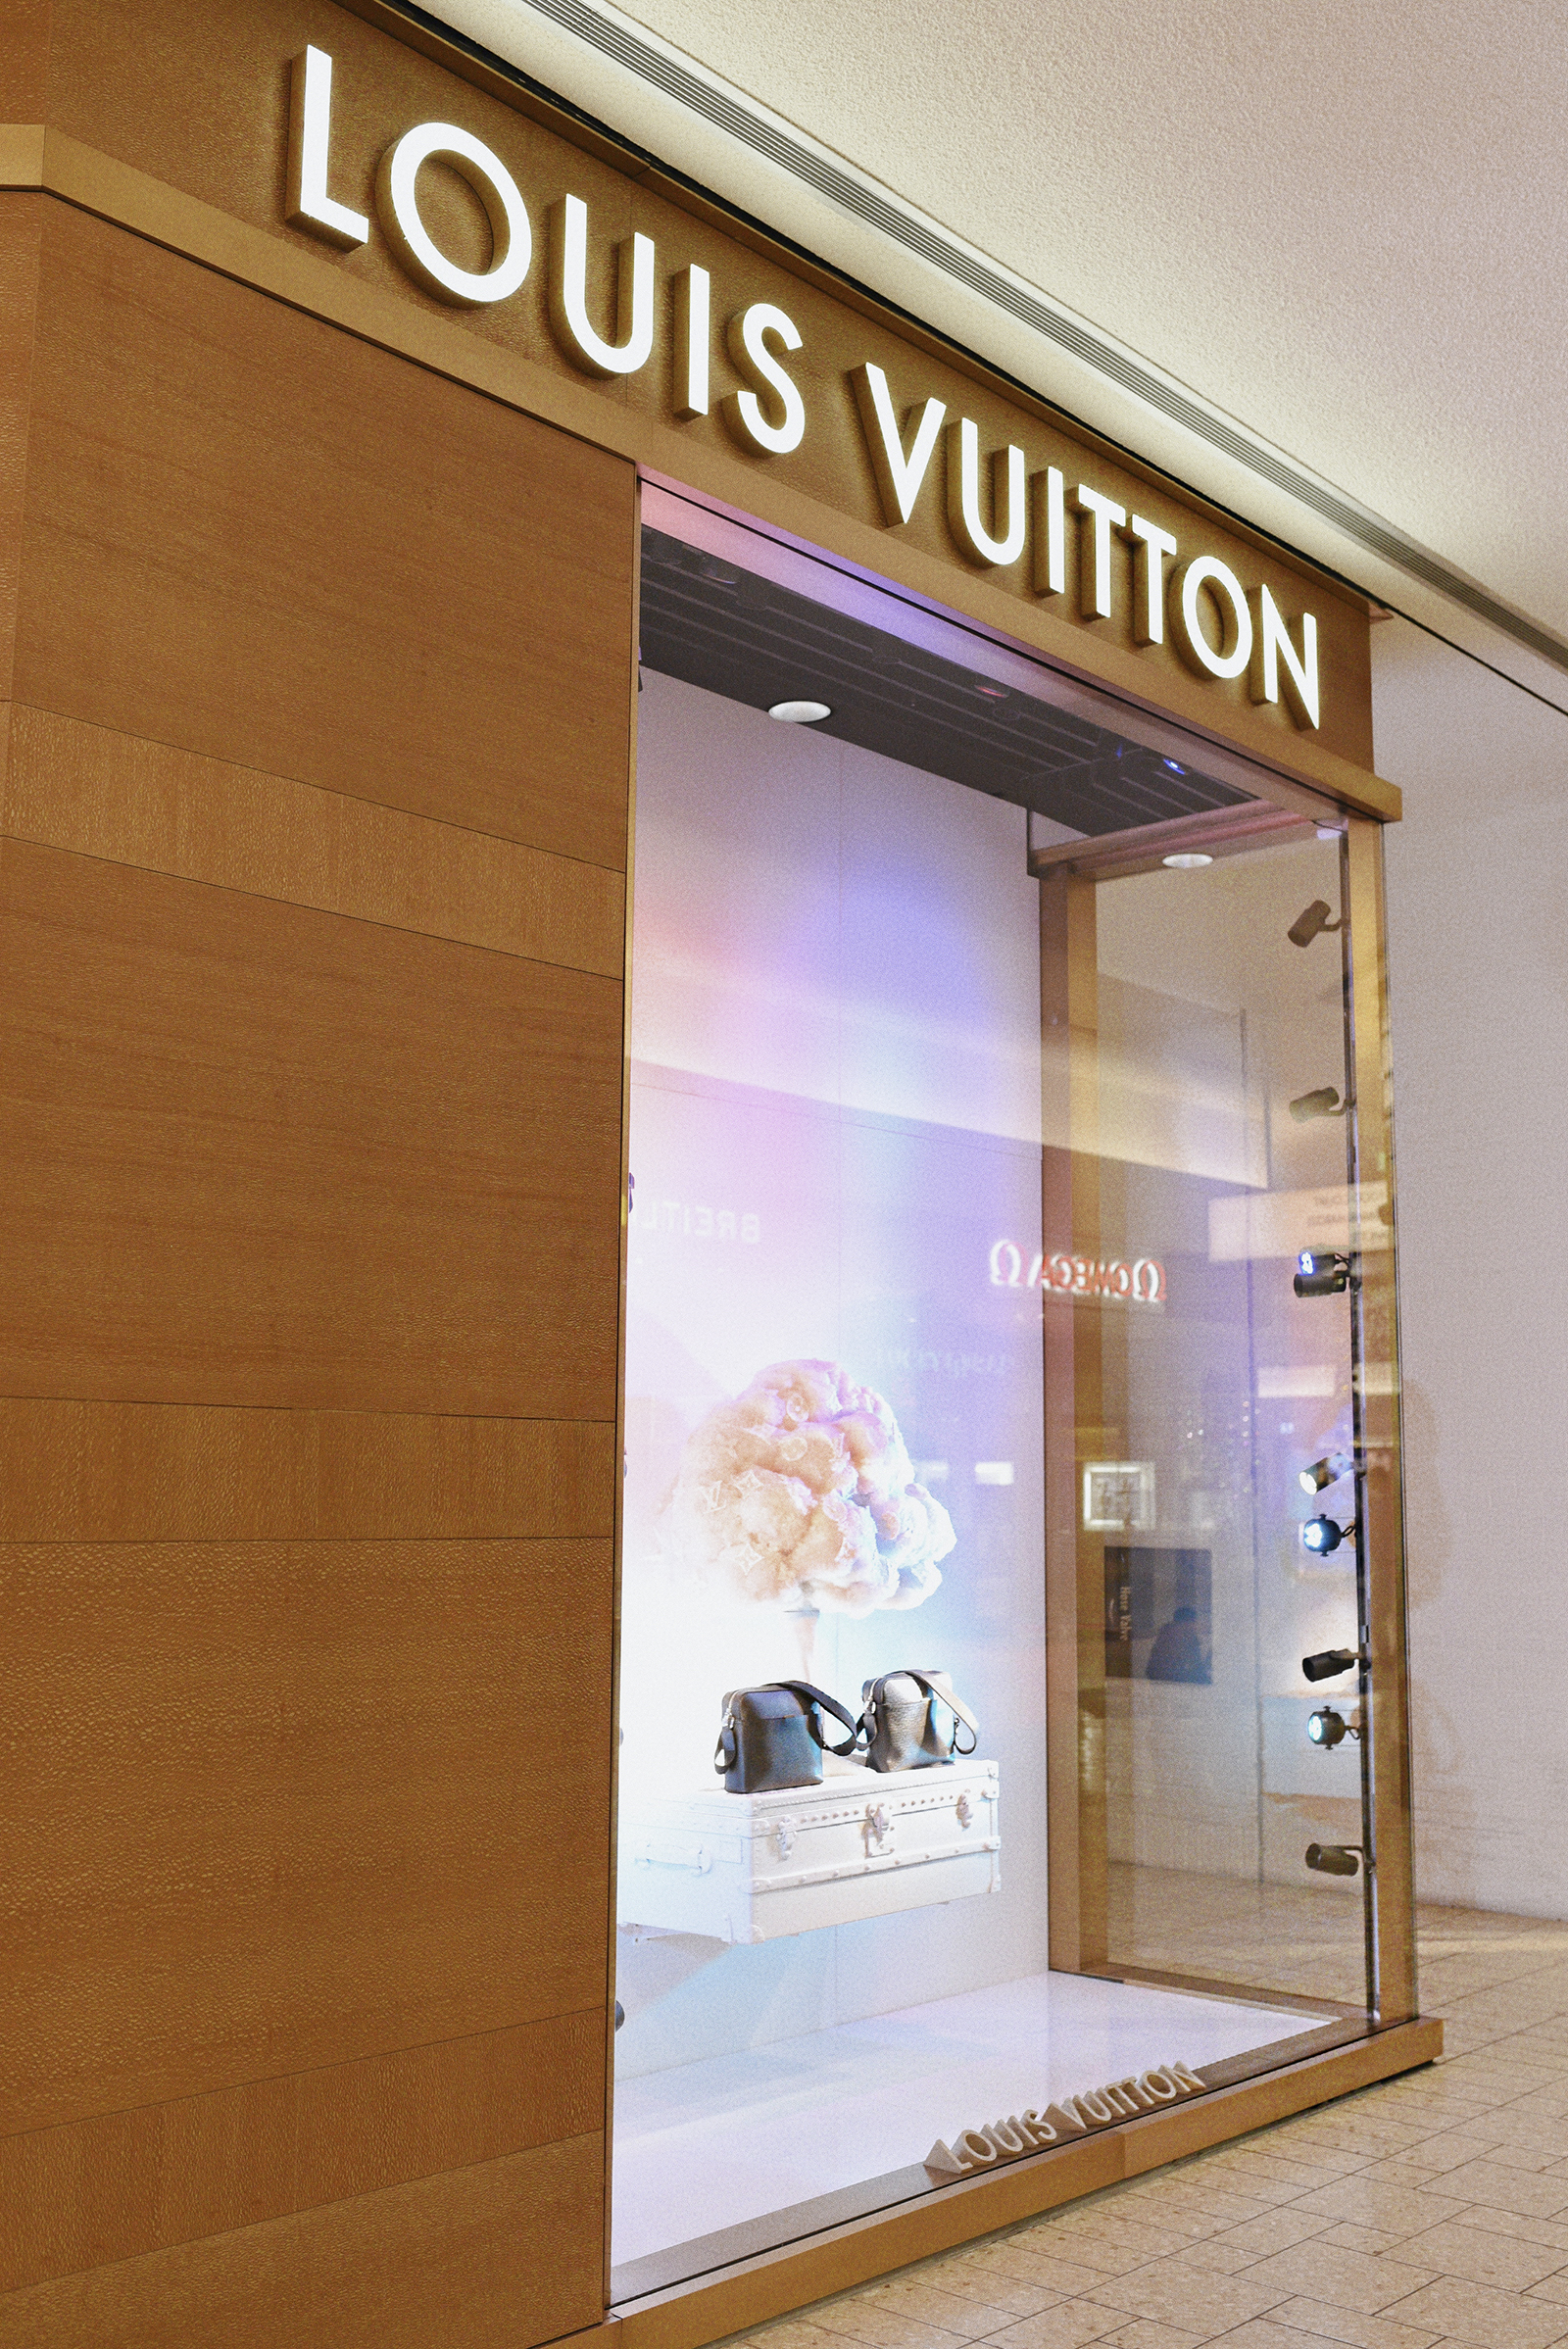 Louis Vuitton store in Cheery creek shopping center in denver.